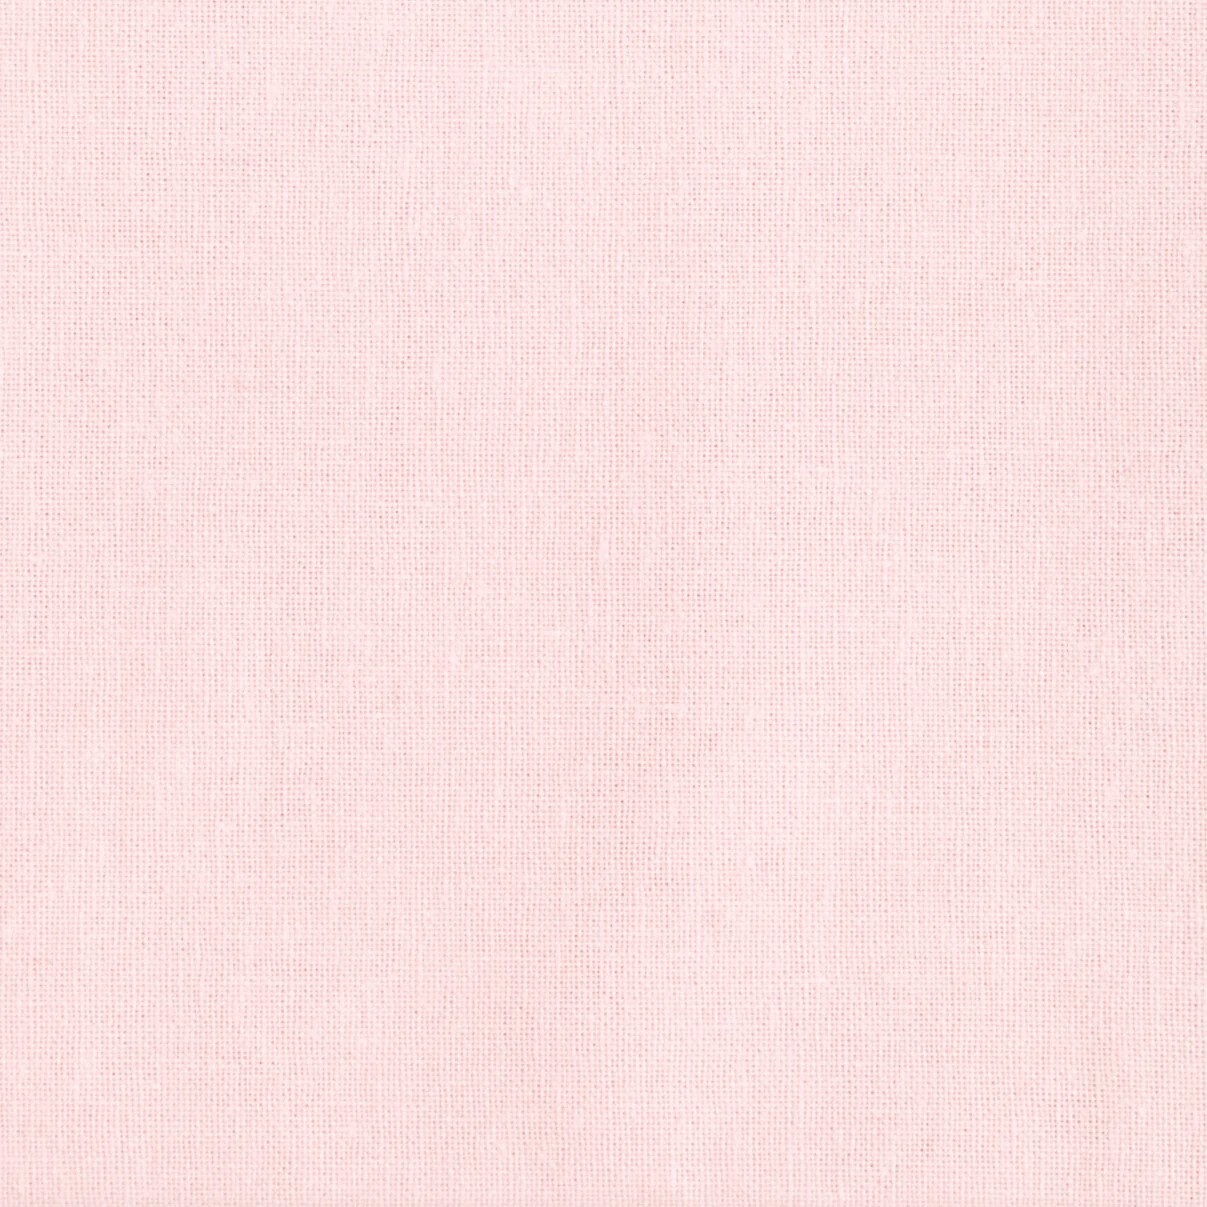 Light Pastel Pink | Quilting Cotton Solids (Homespun) | 112cm Wide